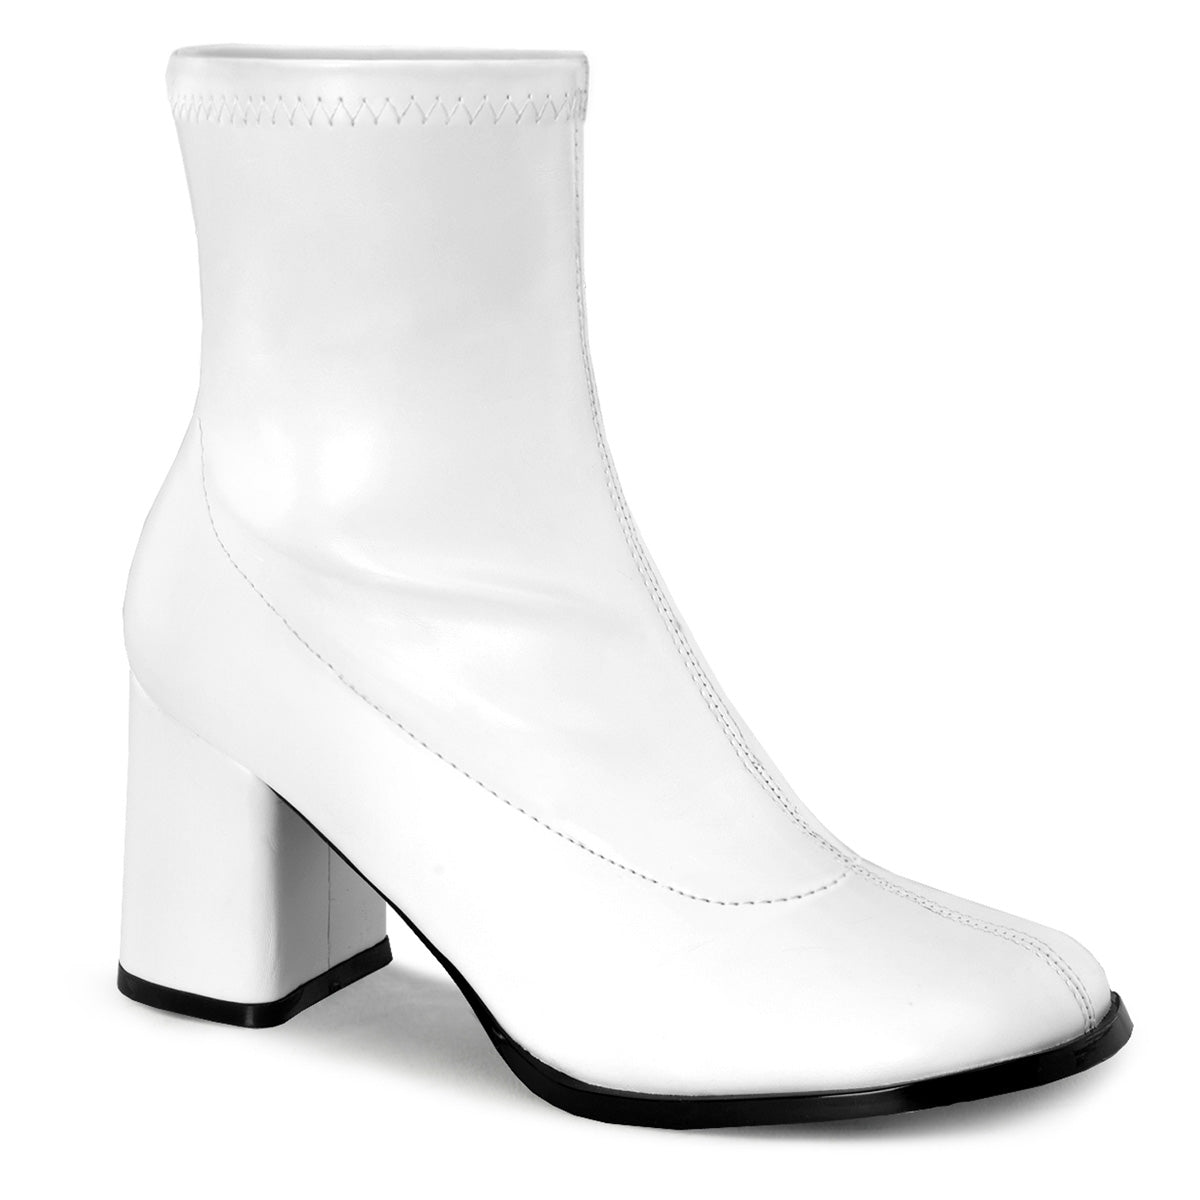 GOGO-150 3 Inch Heel White Women's Boots Funtasma Costume Shoes